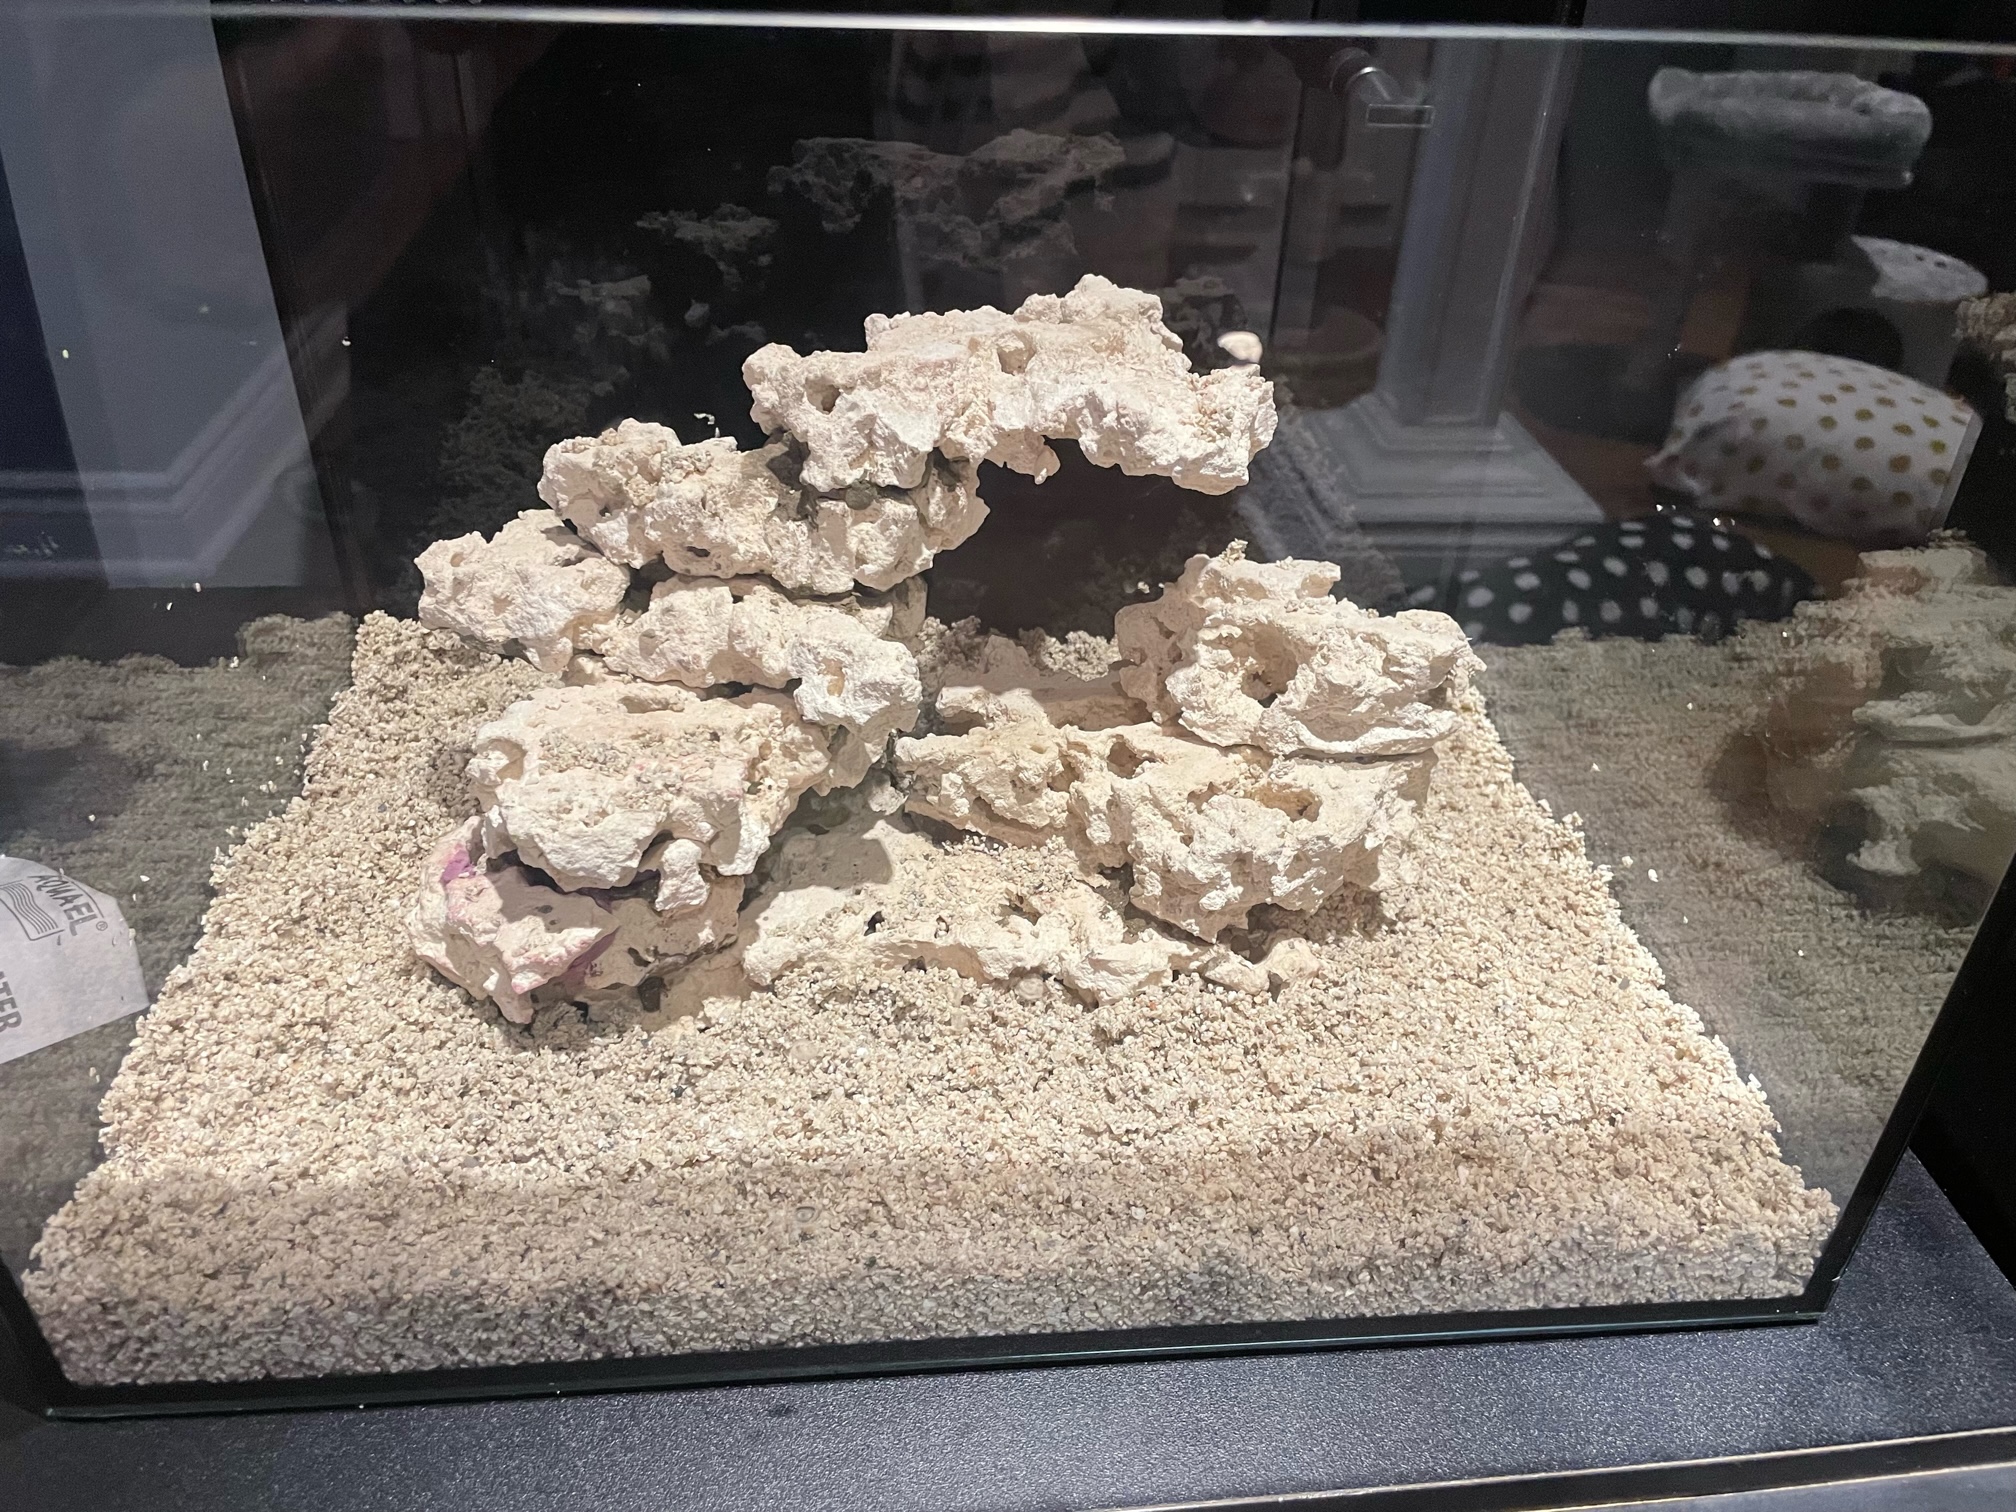 rock aquarium setup